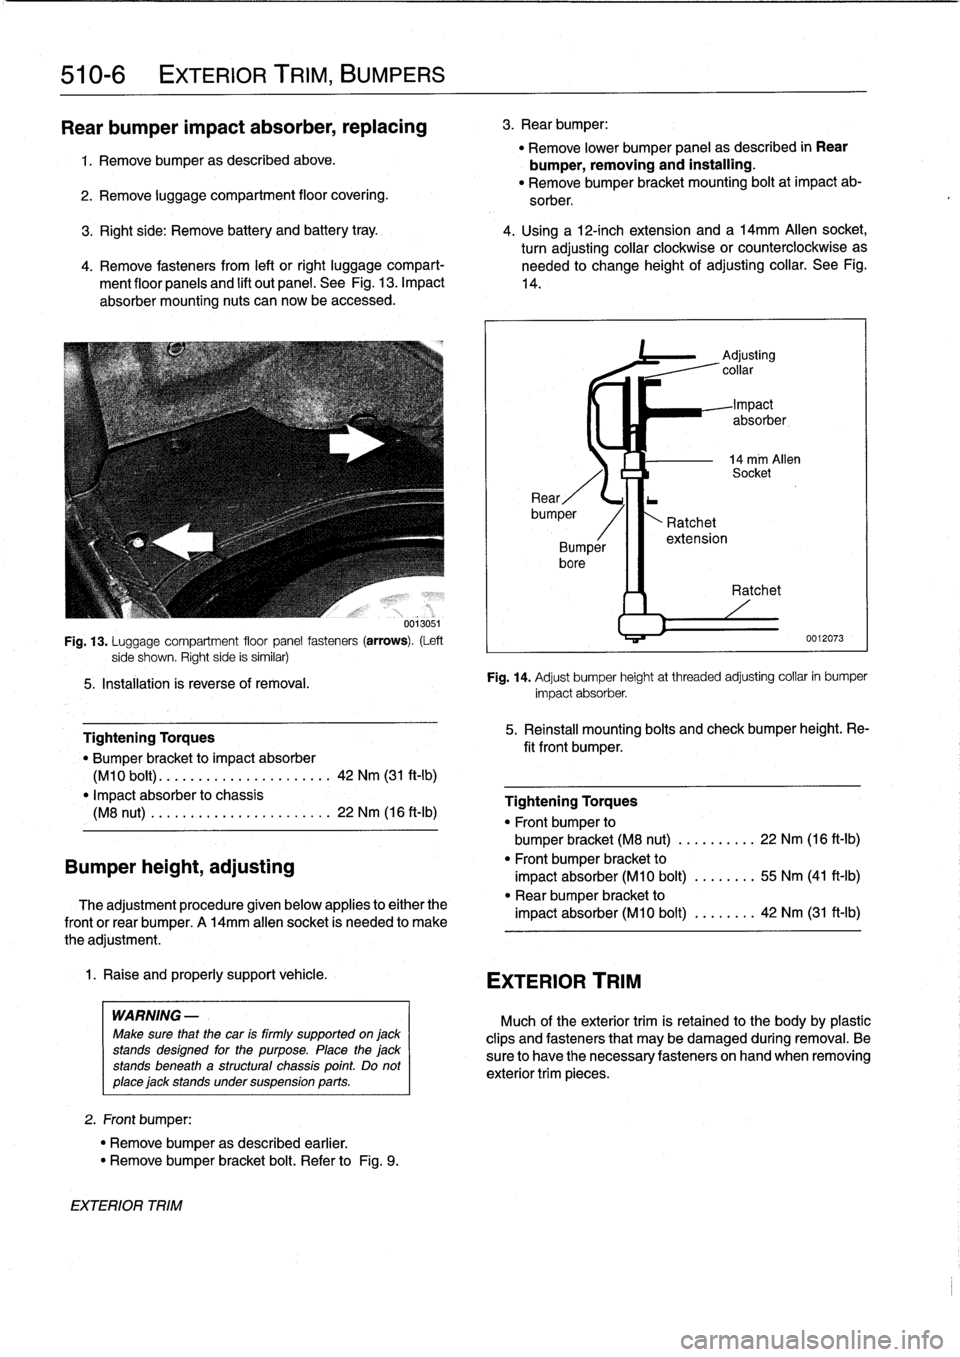 BMW 318i 1996 E36 Workshop Manual 
510-
6

	

EXTERIOR
TRIM,
BUMPERS

Rear
bumper
impact
absorber,replacing

1
.
Remove
bumperas
described
above
.

2
.
Remove
luggage
compartment
floor
covering
.

Fig
.
13
.
Luggage
compartment
floor
